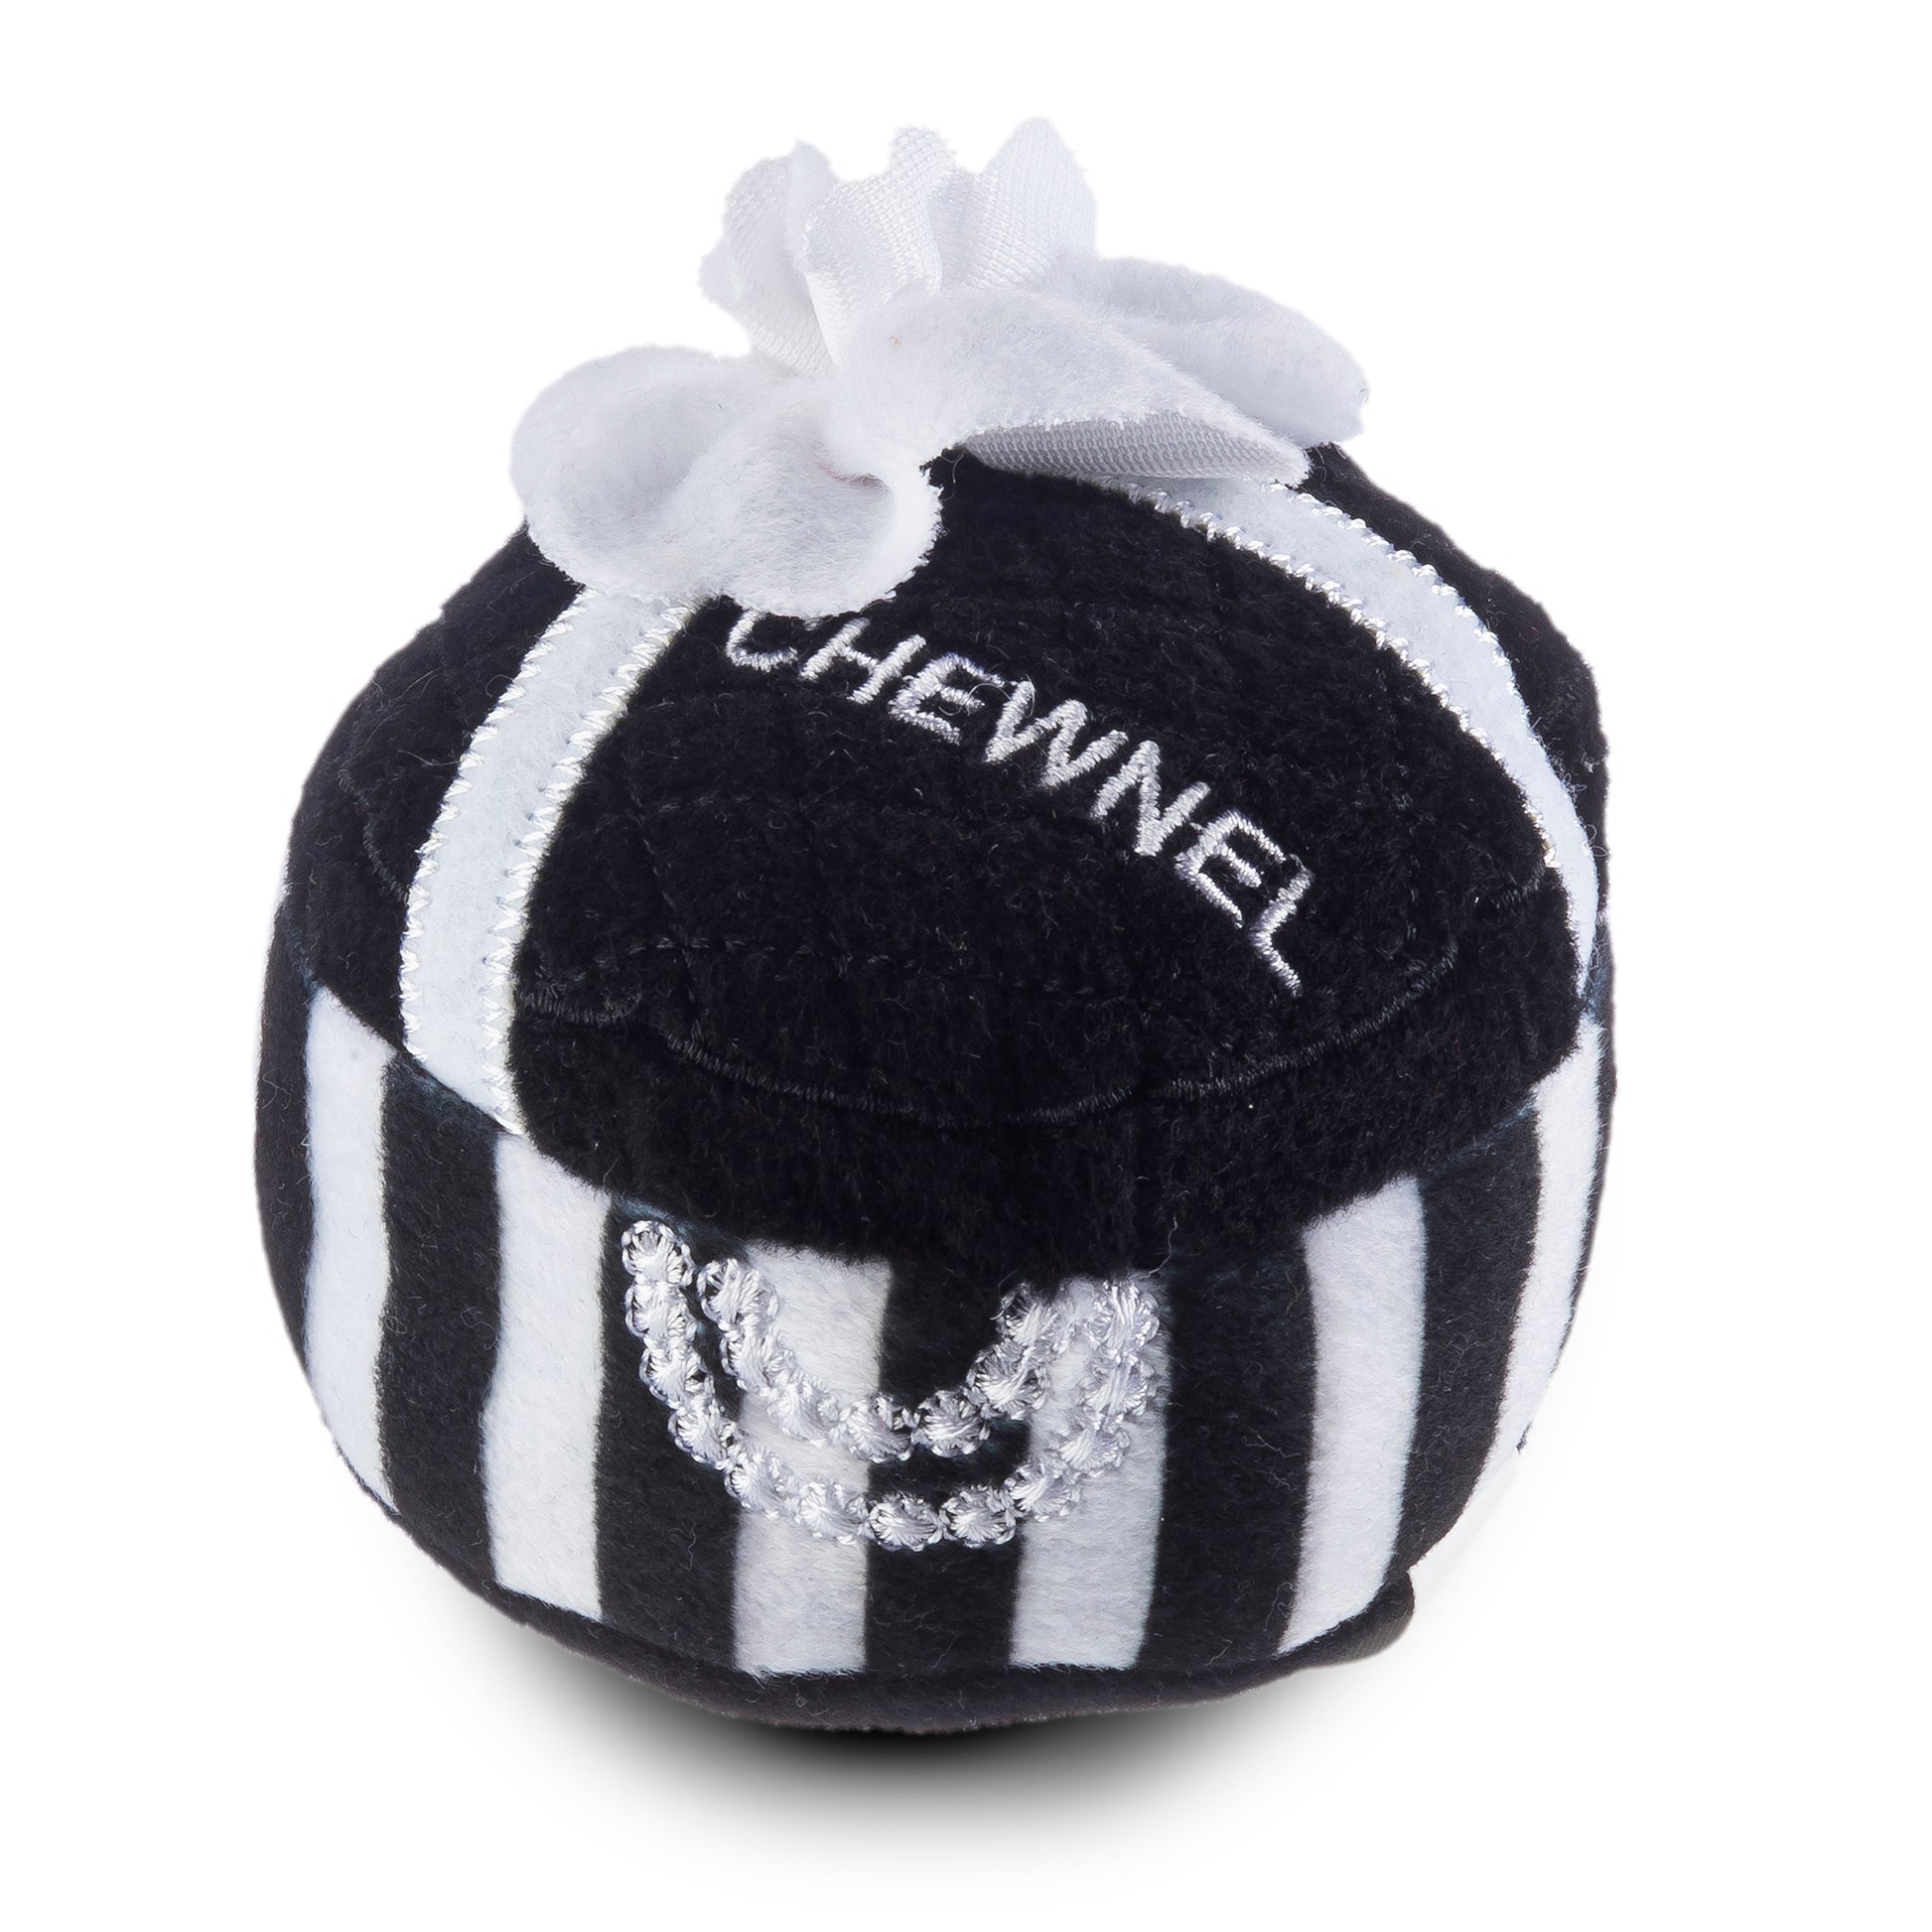 Chewnel Gift Box Plush Toy